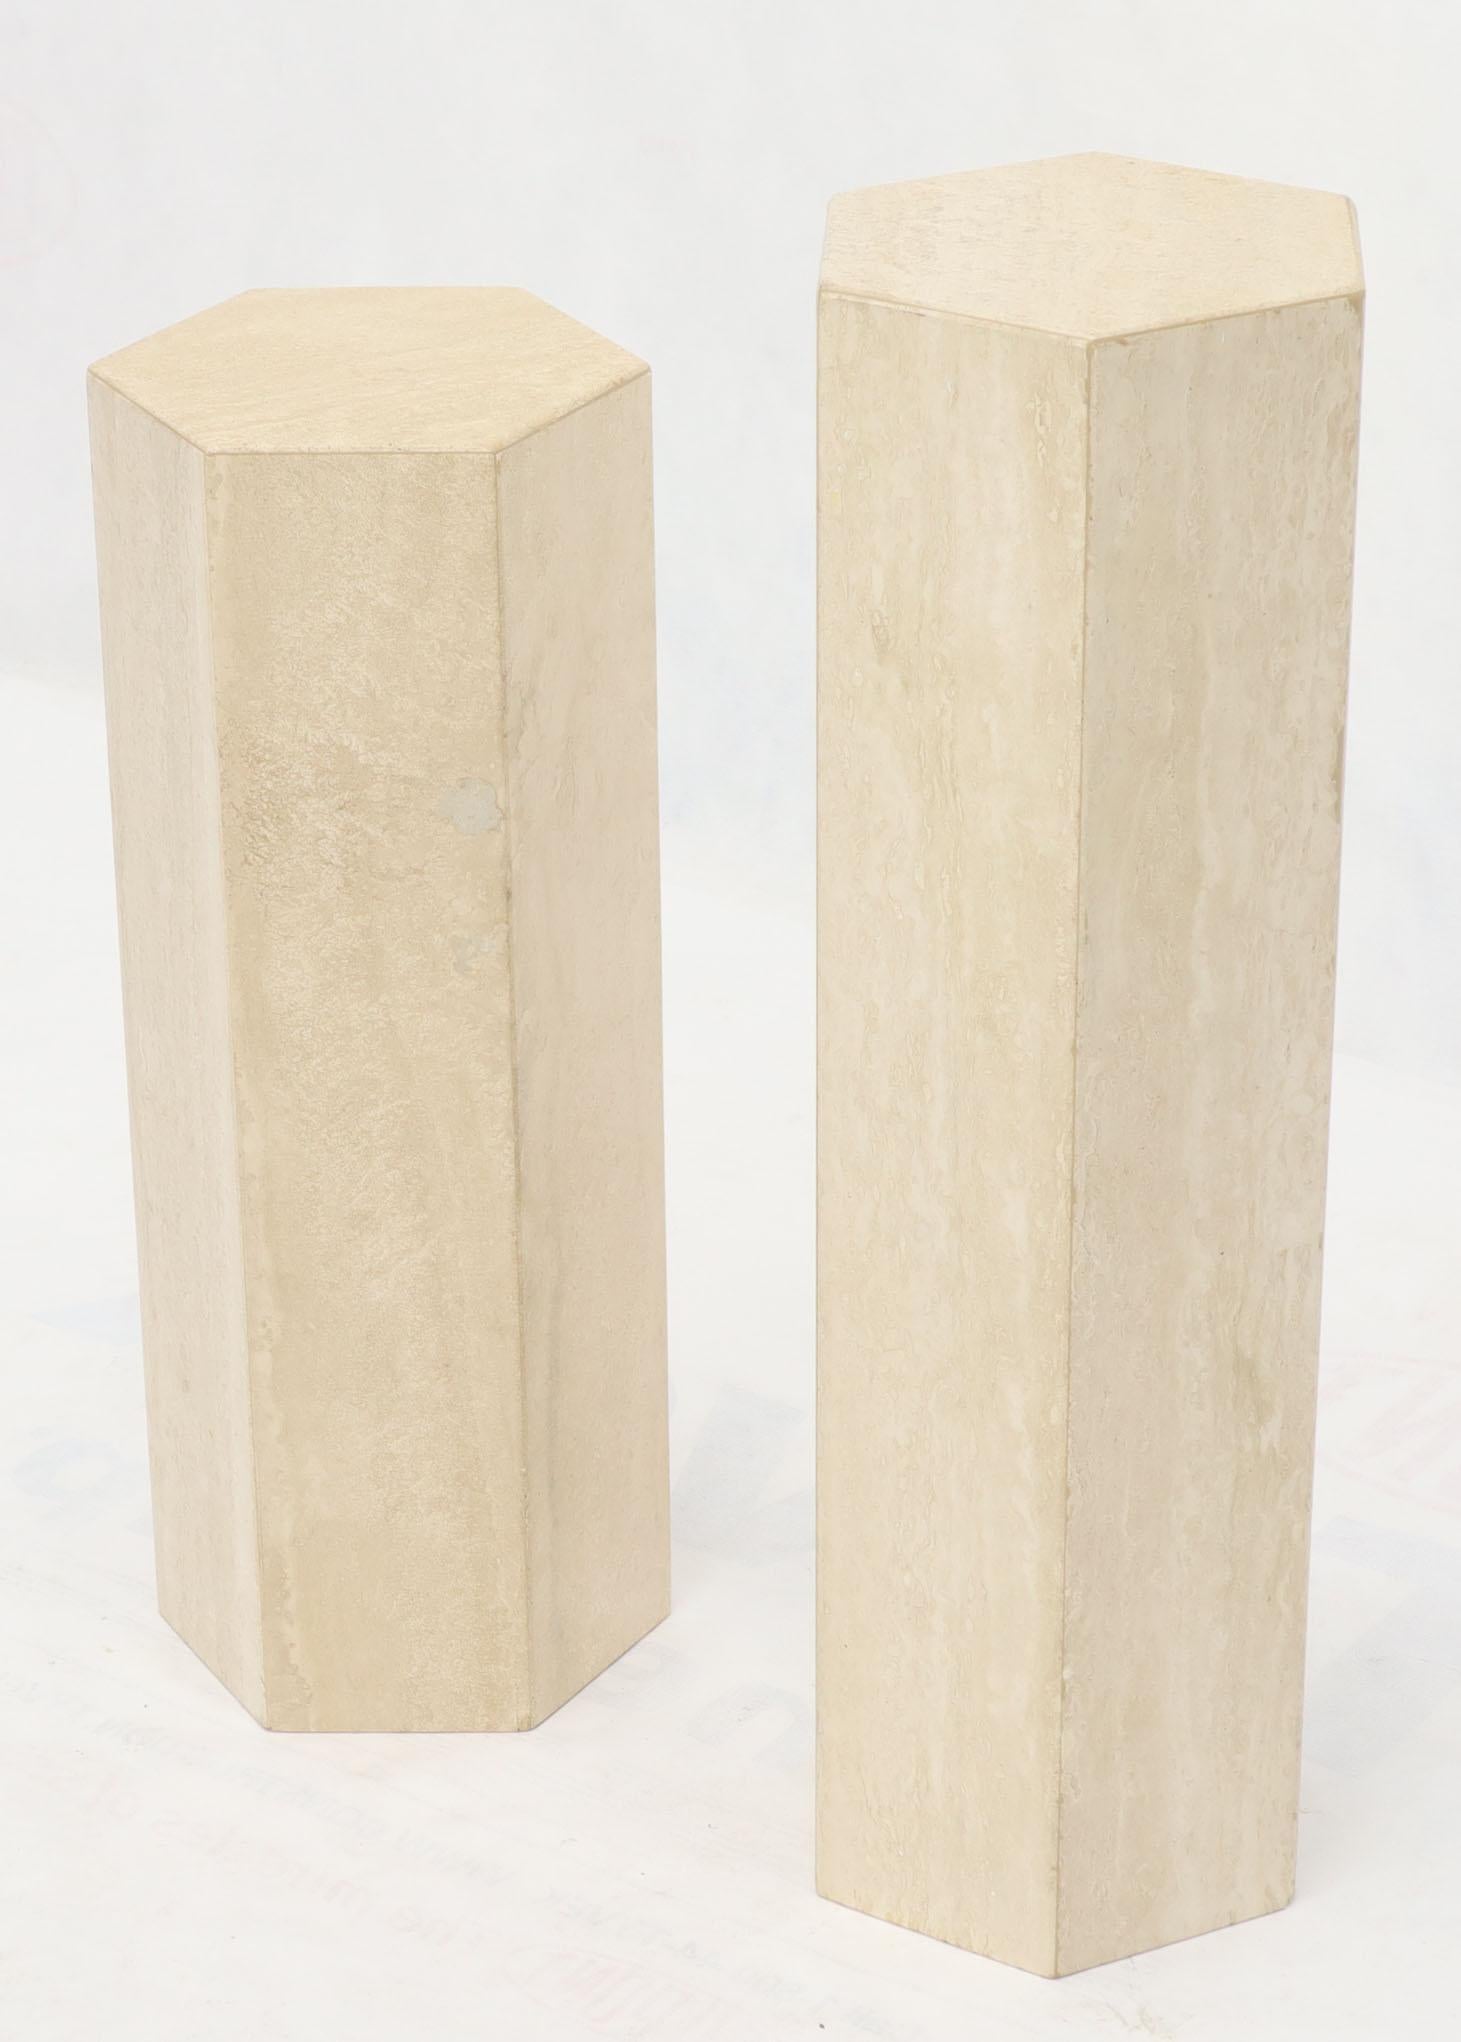 American Mid-Century Modern Travertine Marble Tall Tower Shape Table Pedestal